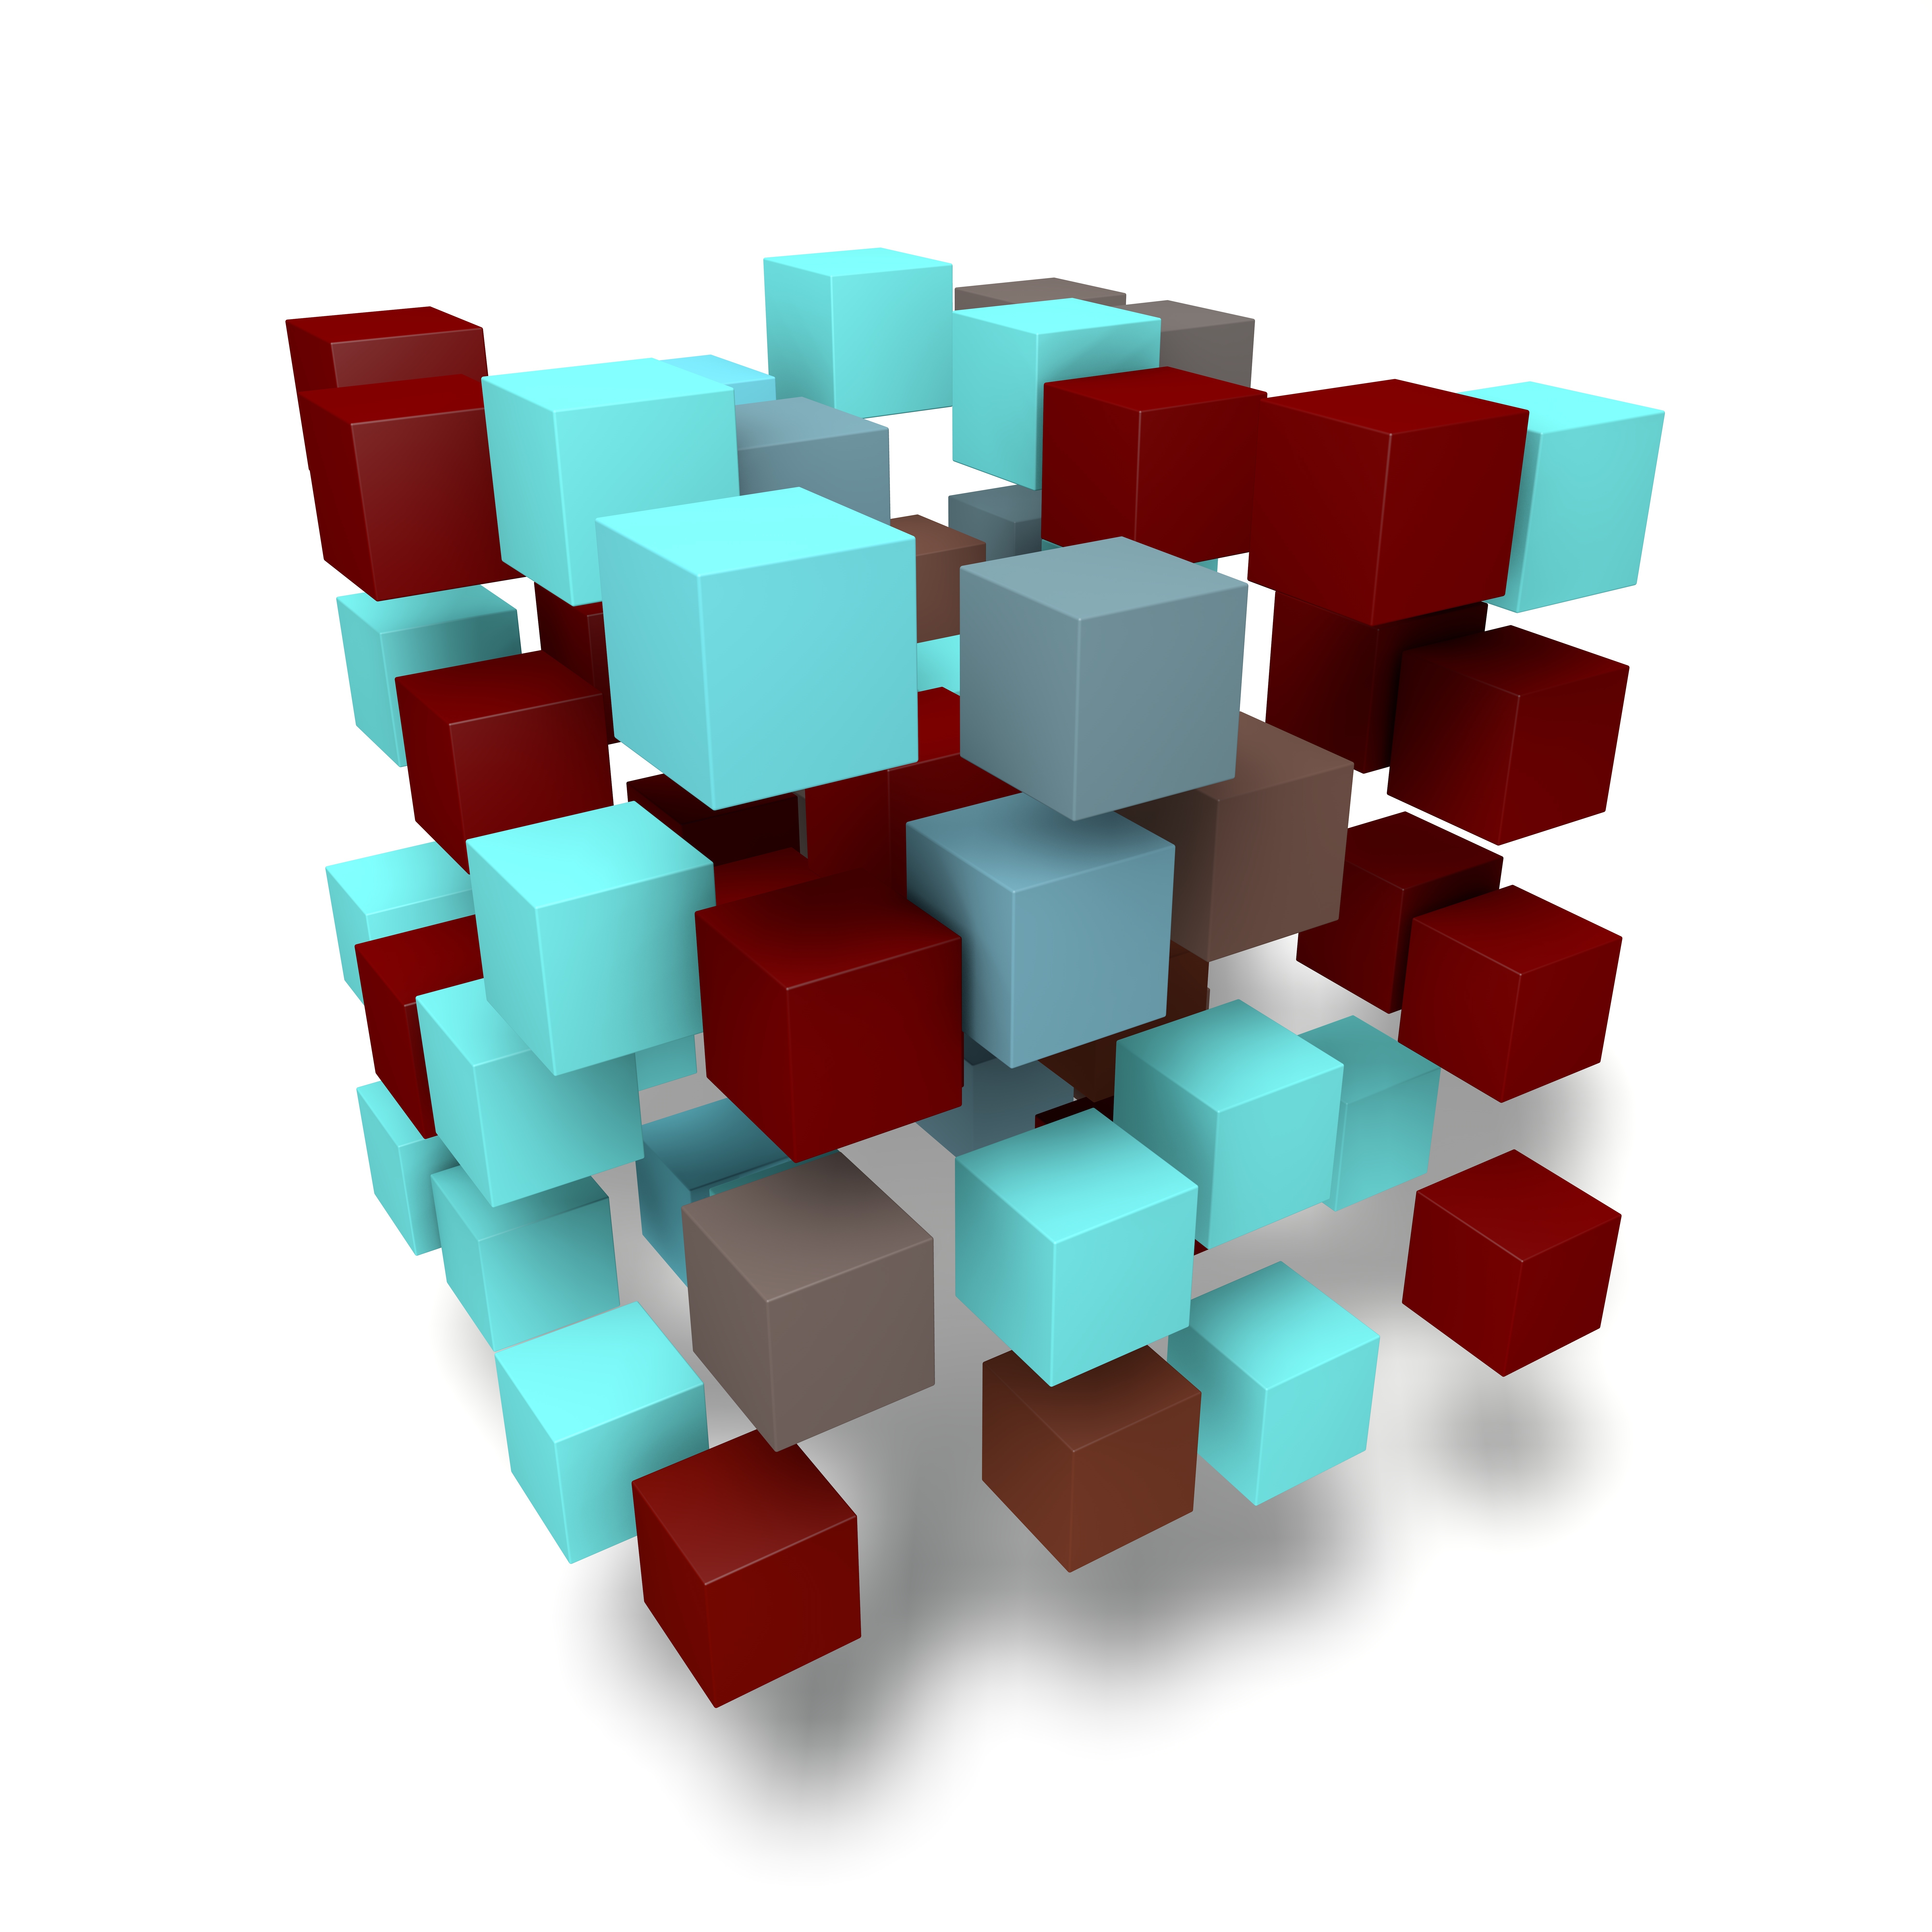 More cubes. 3д кубик. Кубик d3. Объемный кубик. Кубики "абстракция".